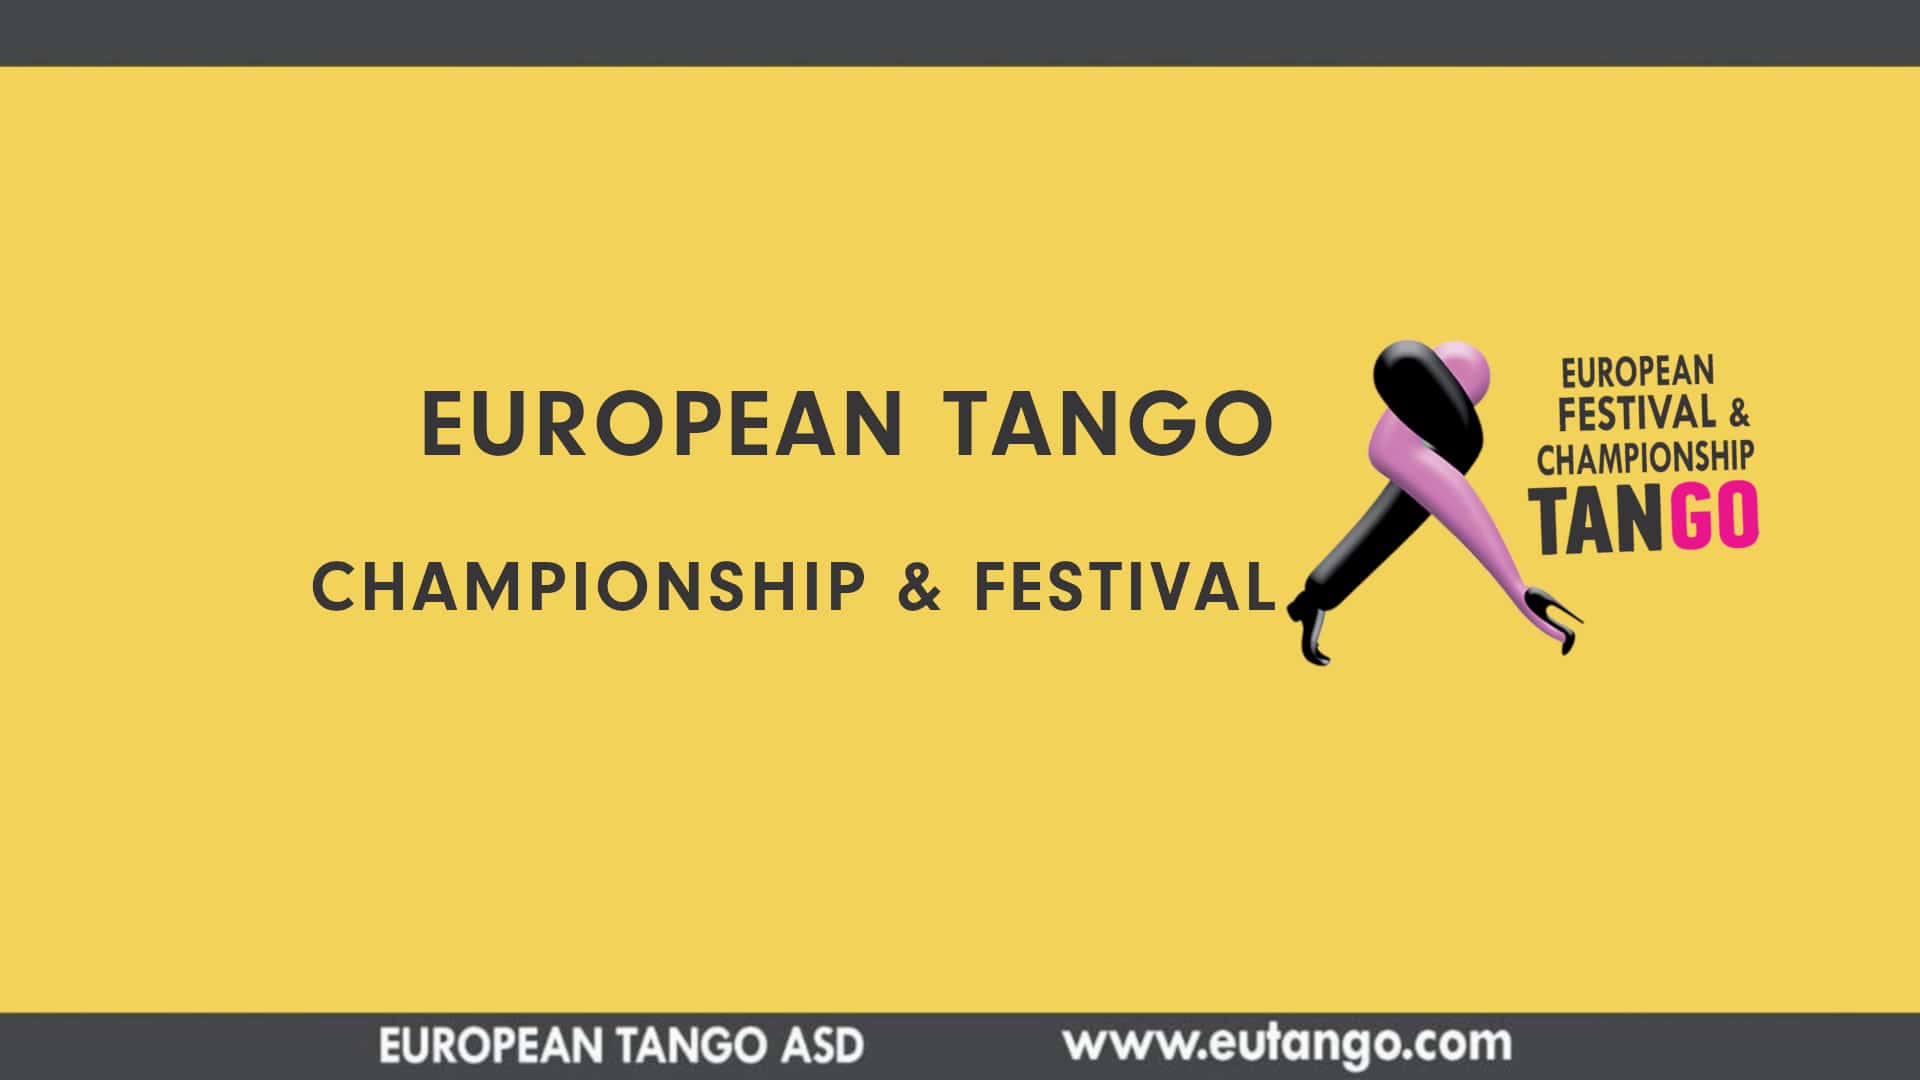 European Tango Championship & Festival